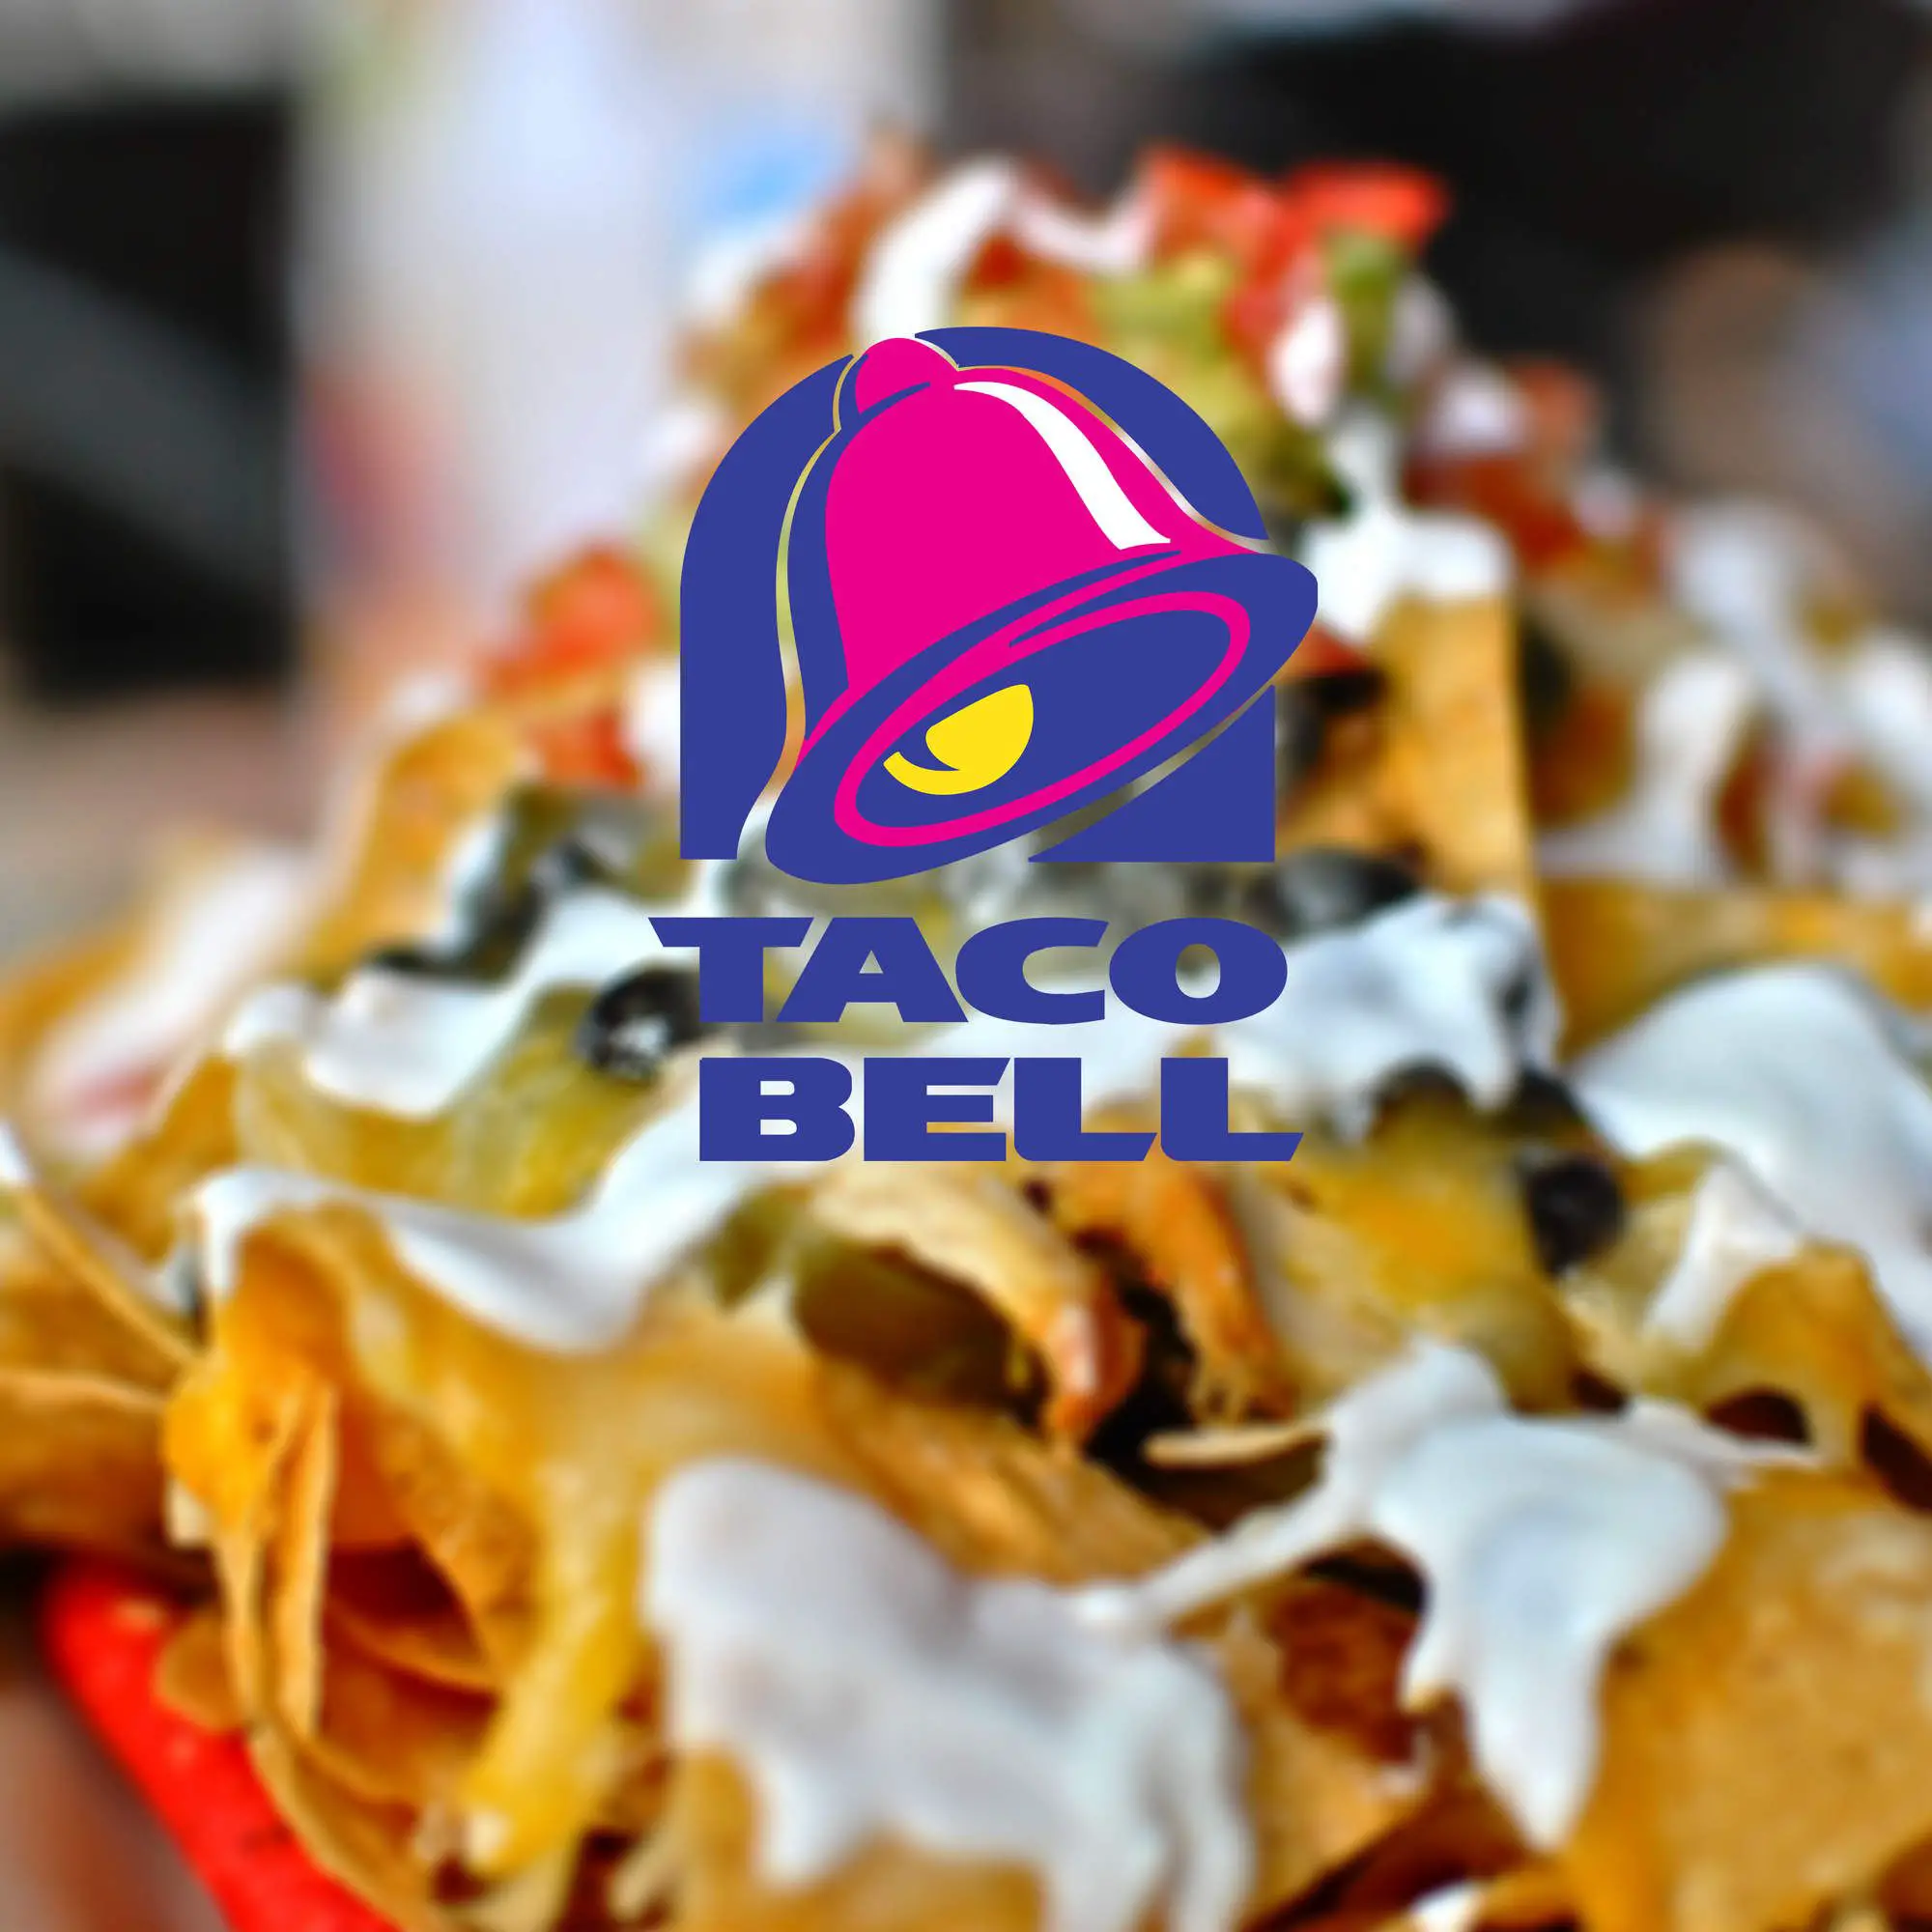 Taco Bell is bringing back its legendary XXL Nachos